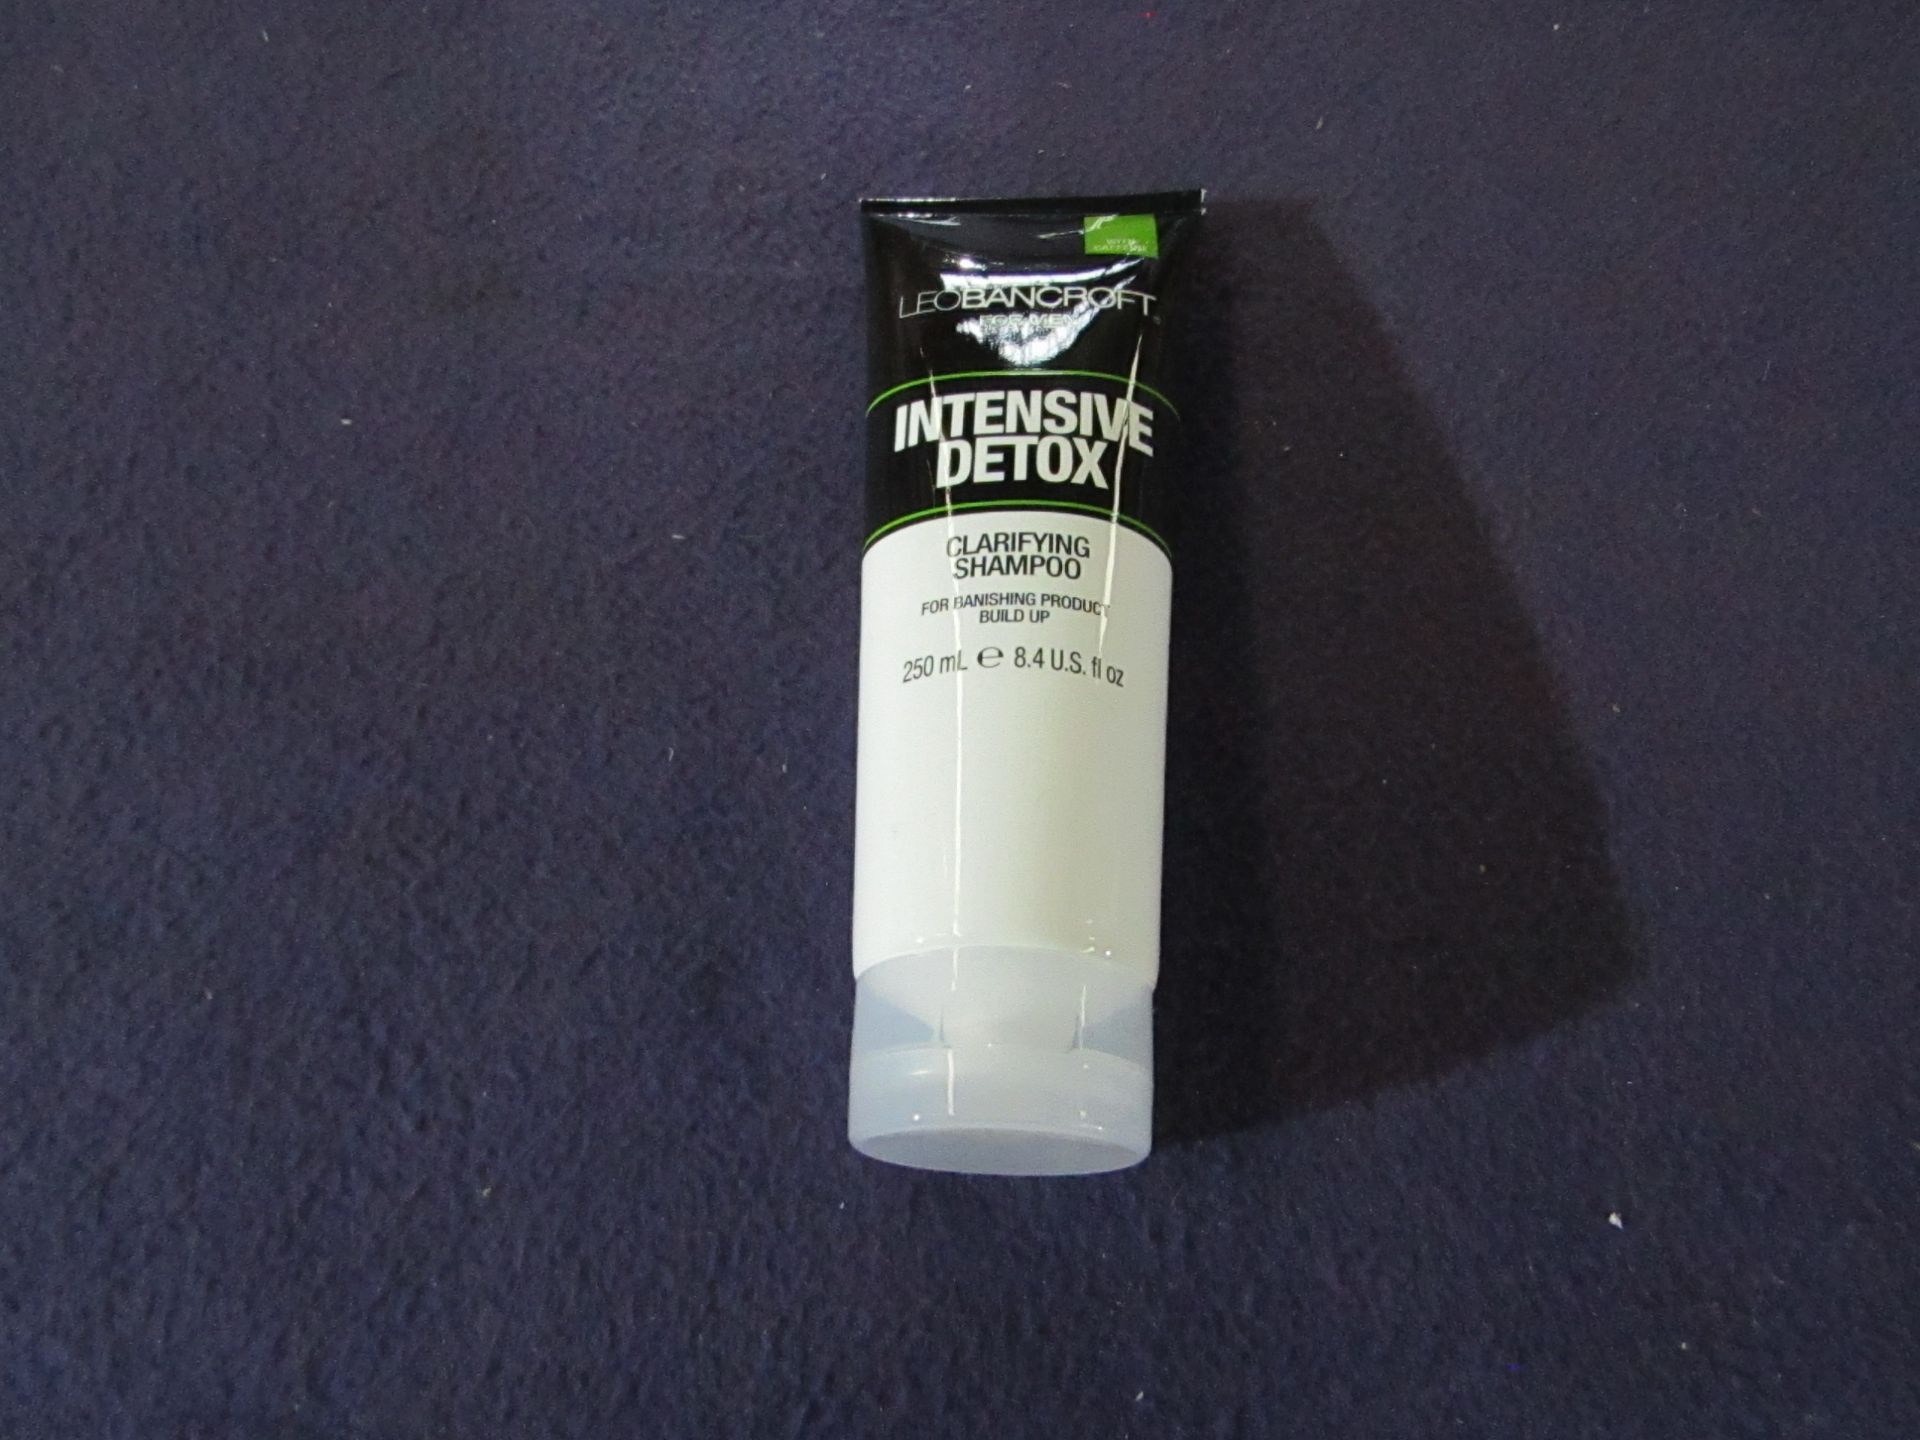 7x Leobancroft - Intensive Detox Clarifying Shampoo - 250ml Bottles - Unused, No Packaging.